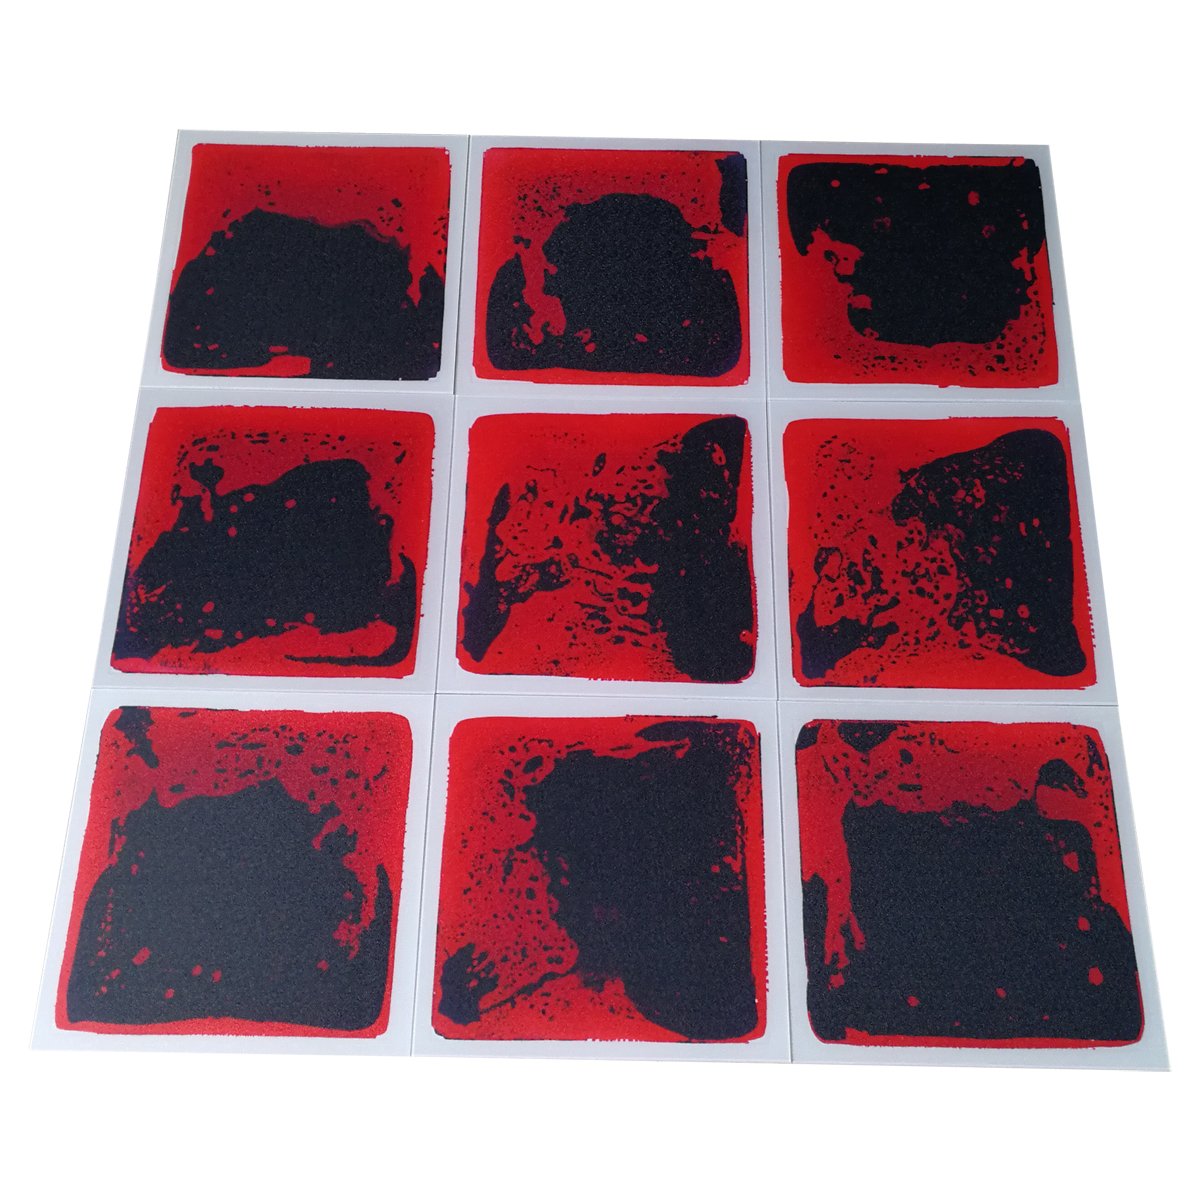 Art3d Liquid Dance Floor Colorful Home Decor Tile, 12" x 12" Black-Red